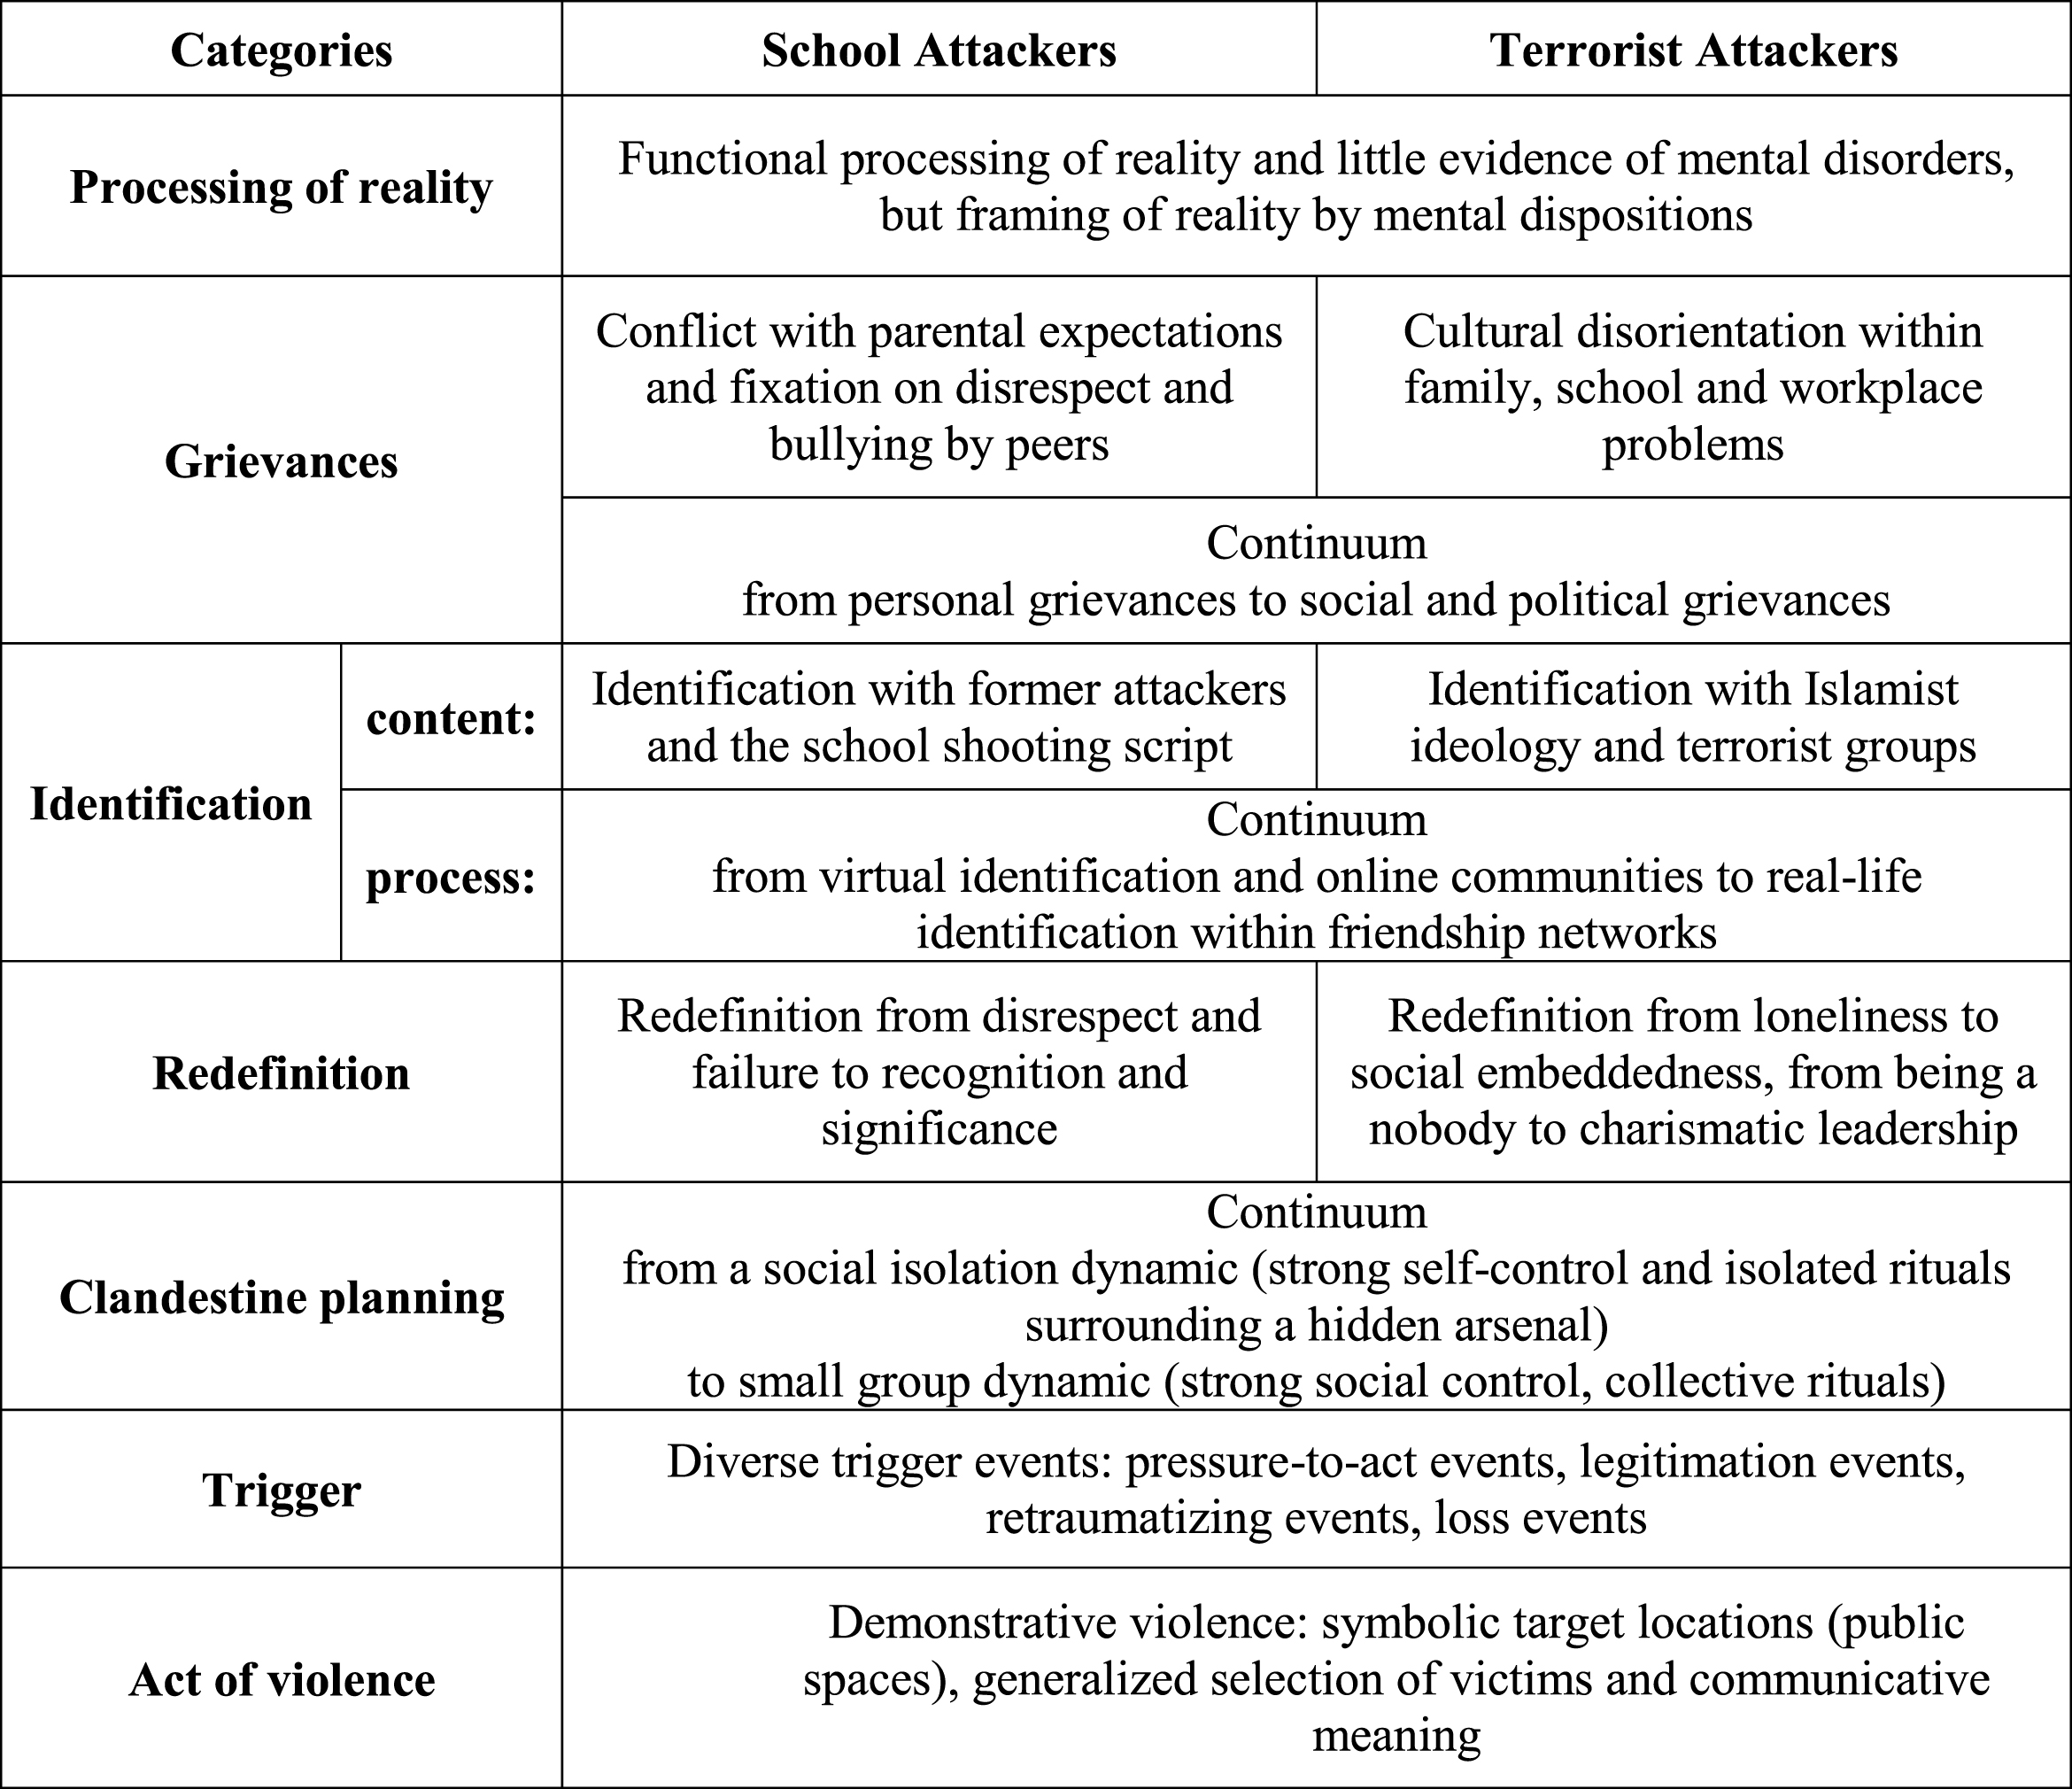 Developmental pathways of school attackers and terrorist attackers.